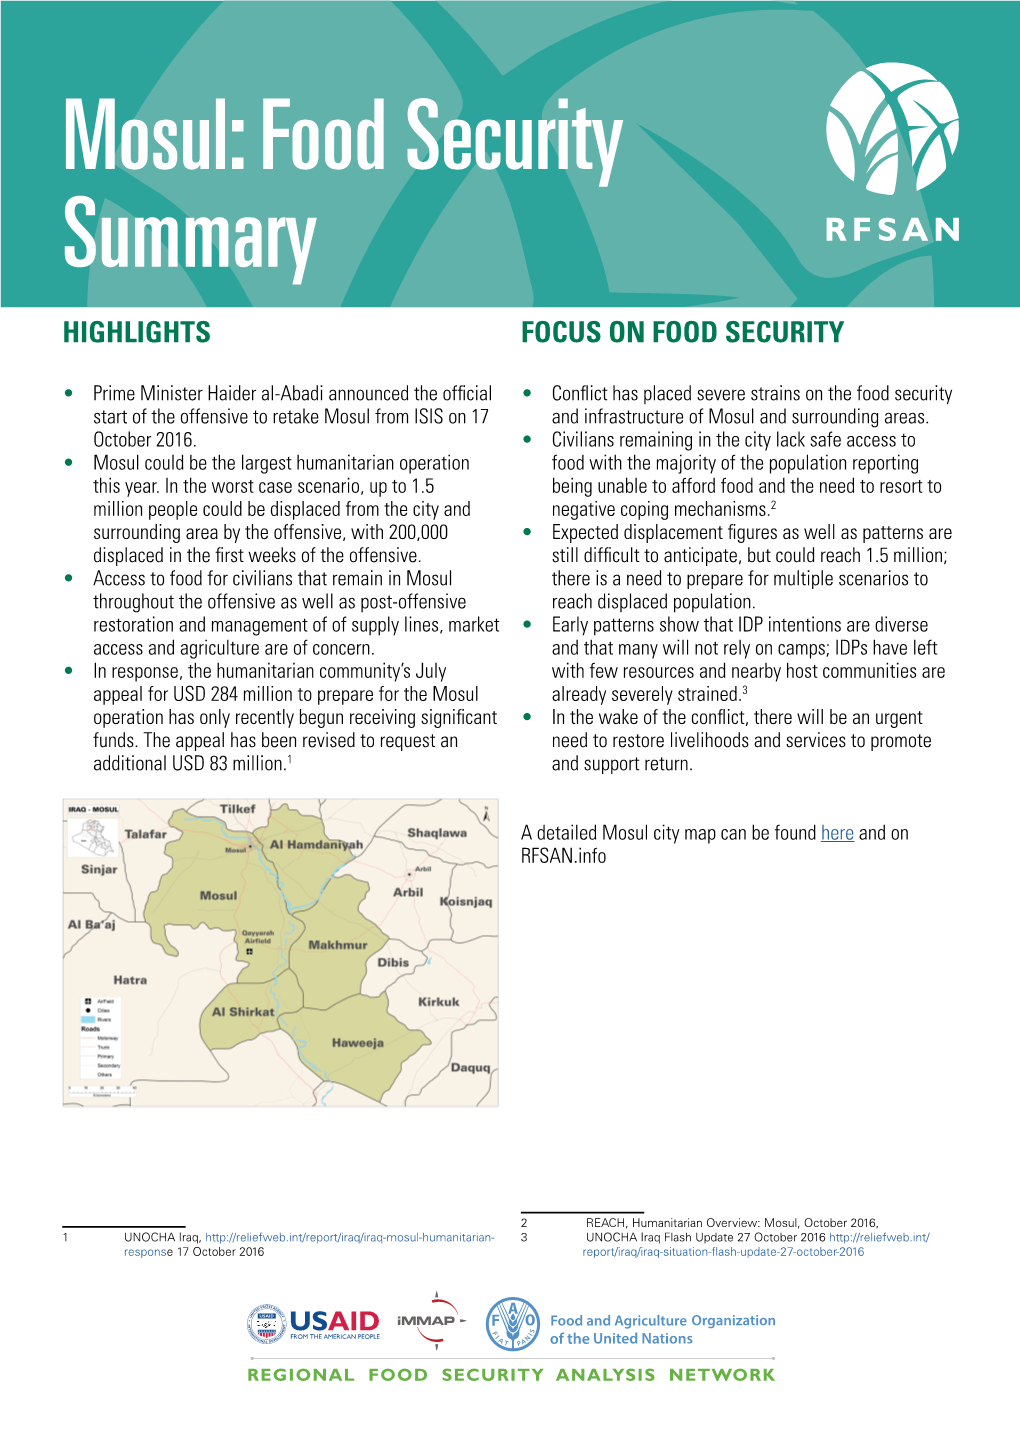 Mosul: Food Security Summary